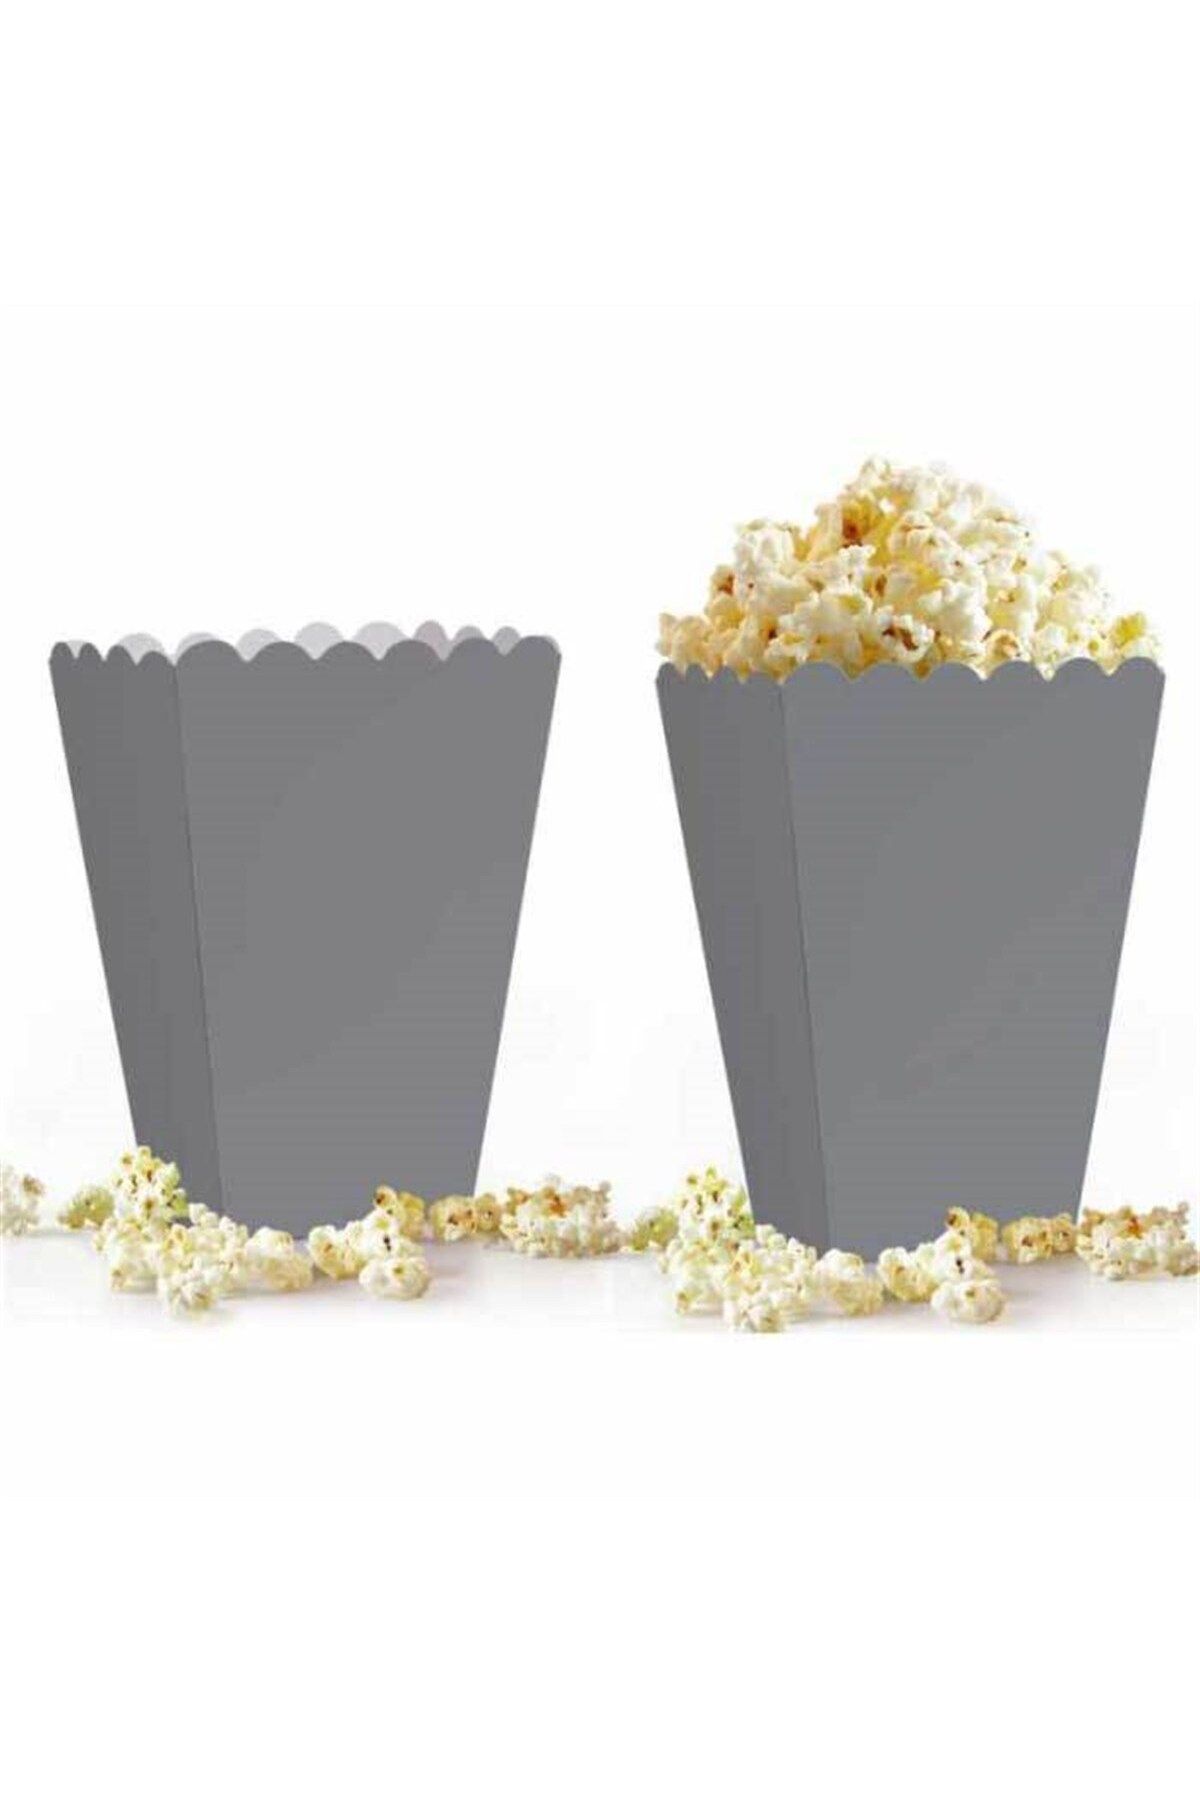 Partioutlet Popcorn Mısır Kutusu Gümüş Renk 8 Adet